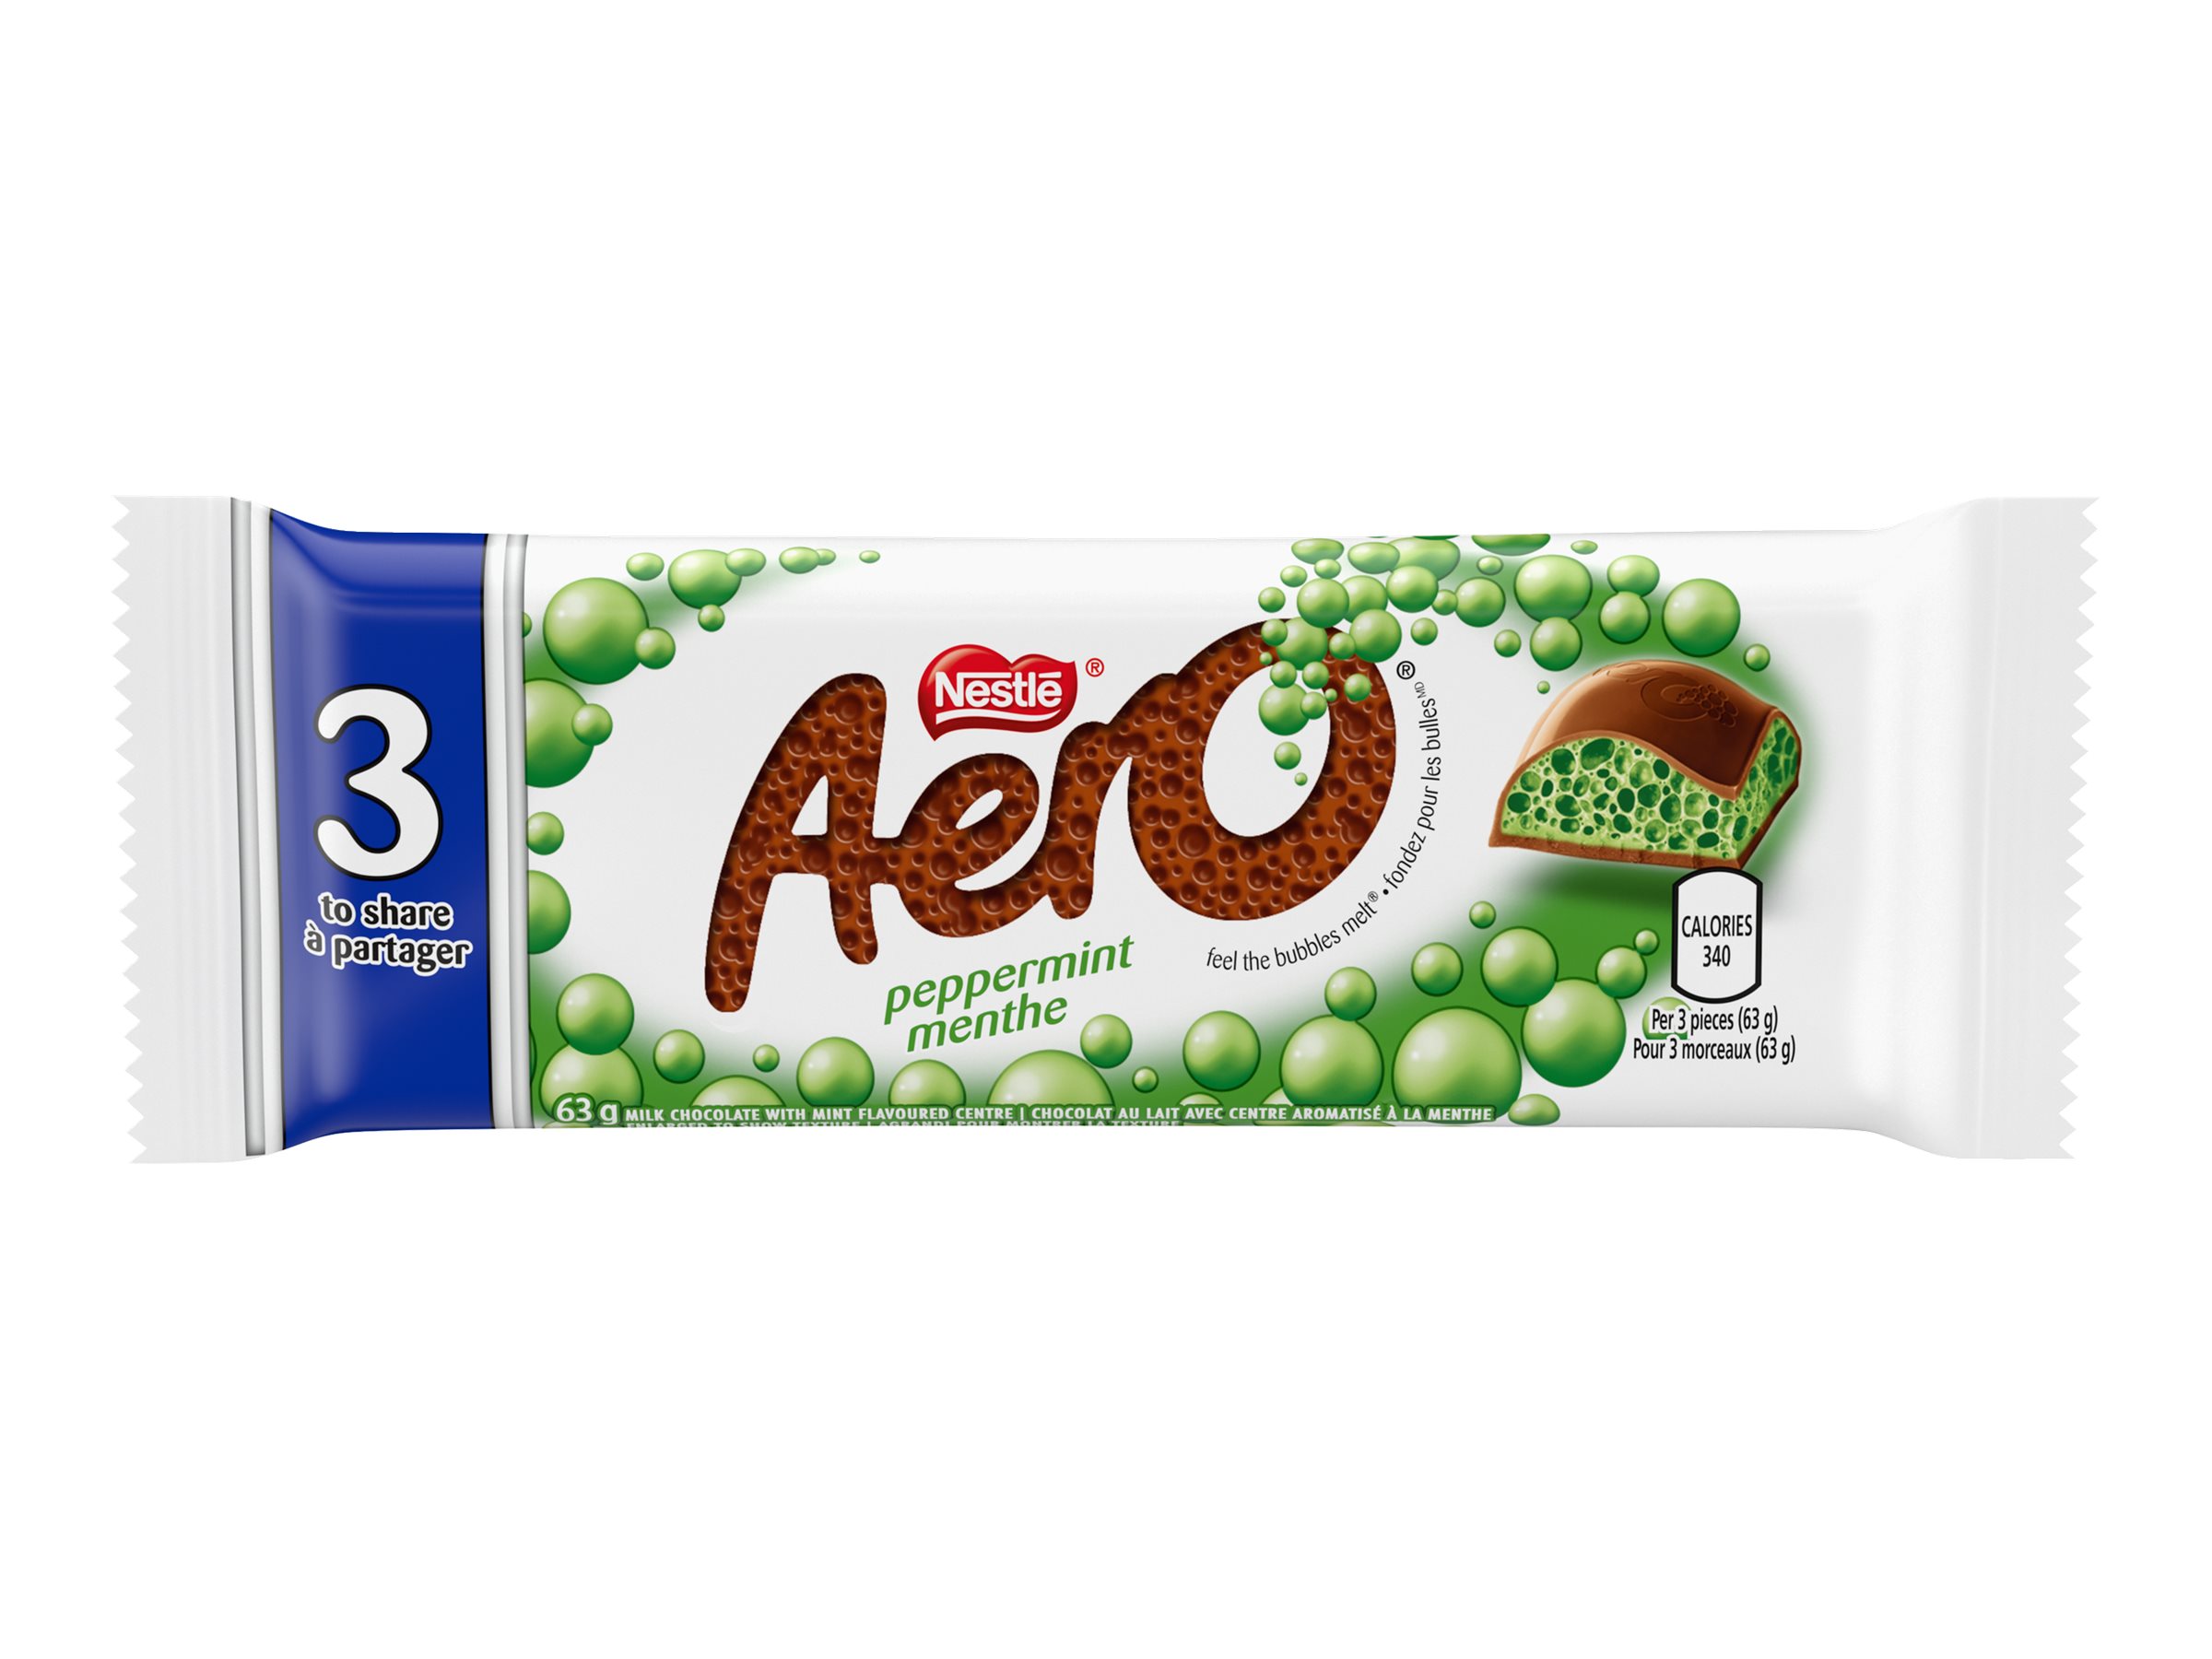 NESTLE Aero Milk Chocolate Bar - Peppermint - 63g